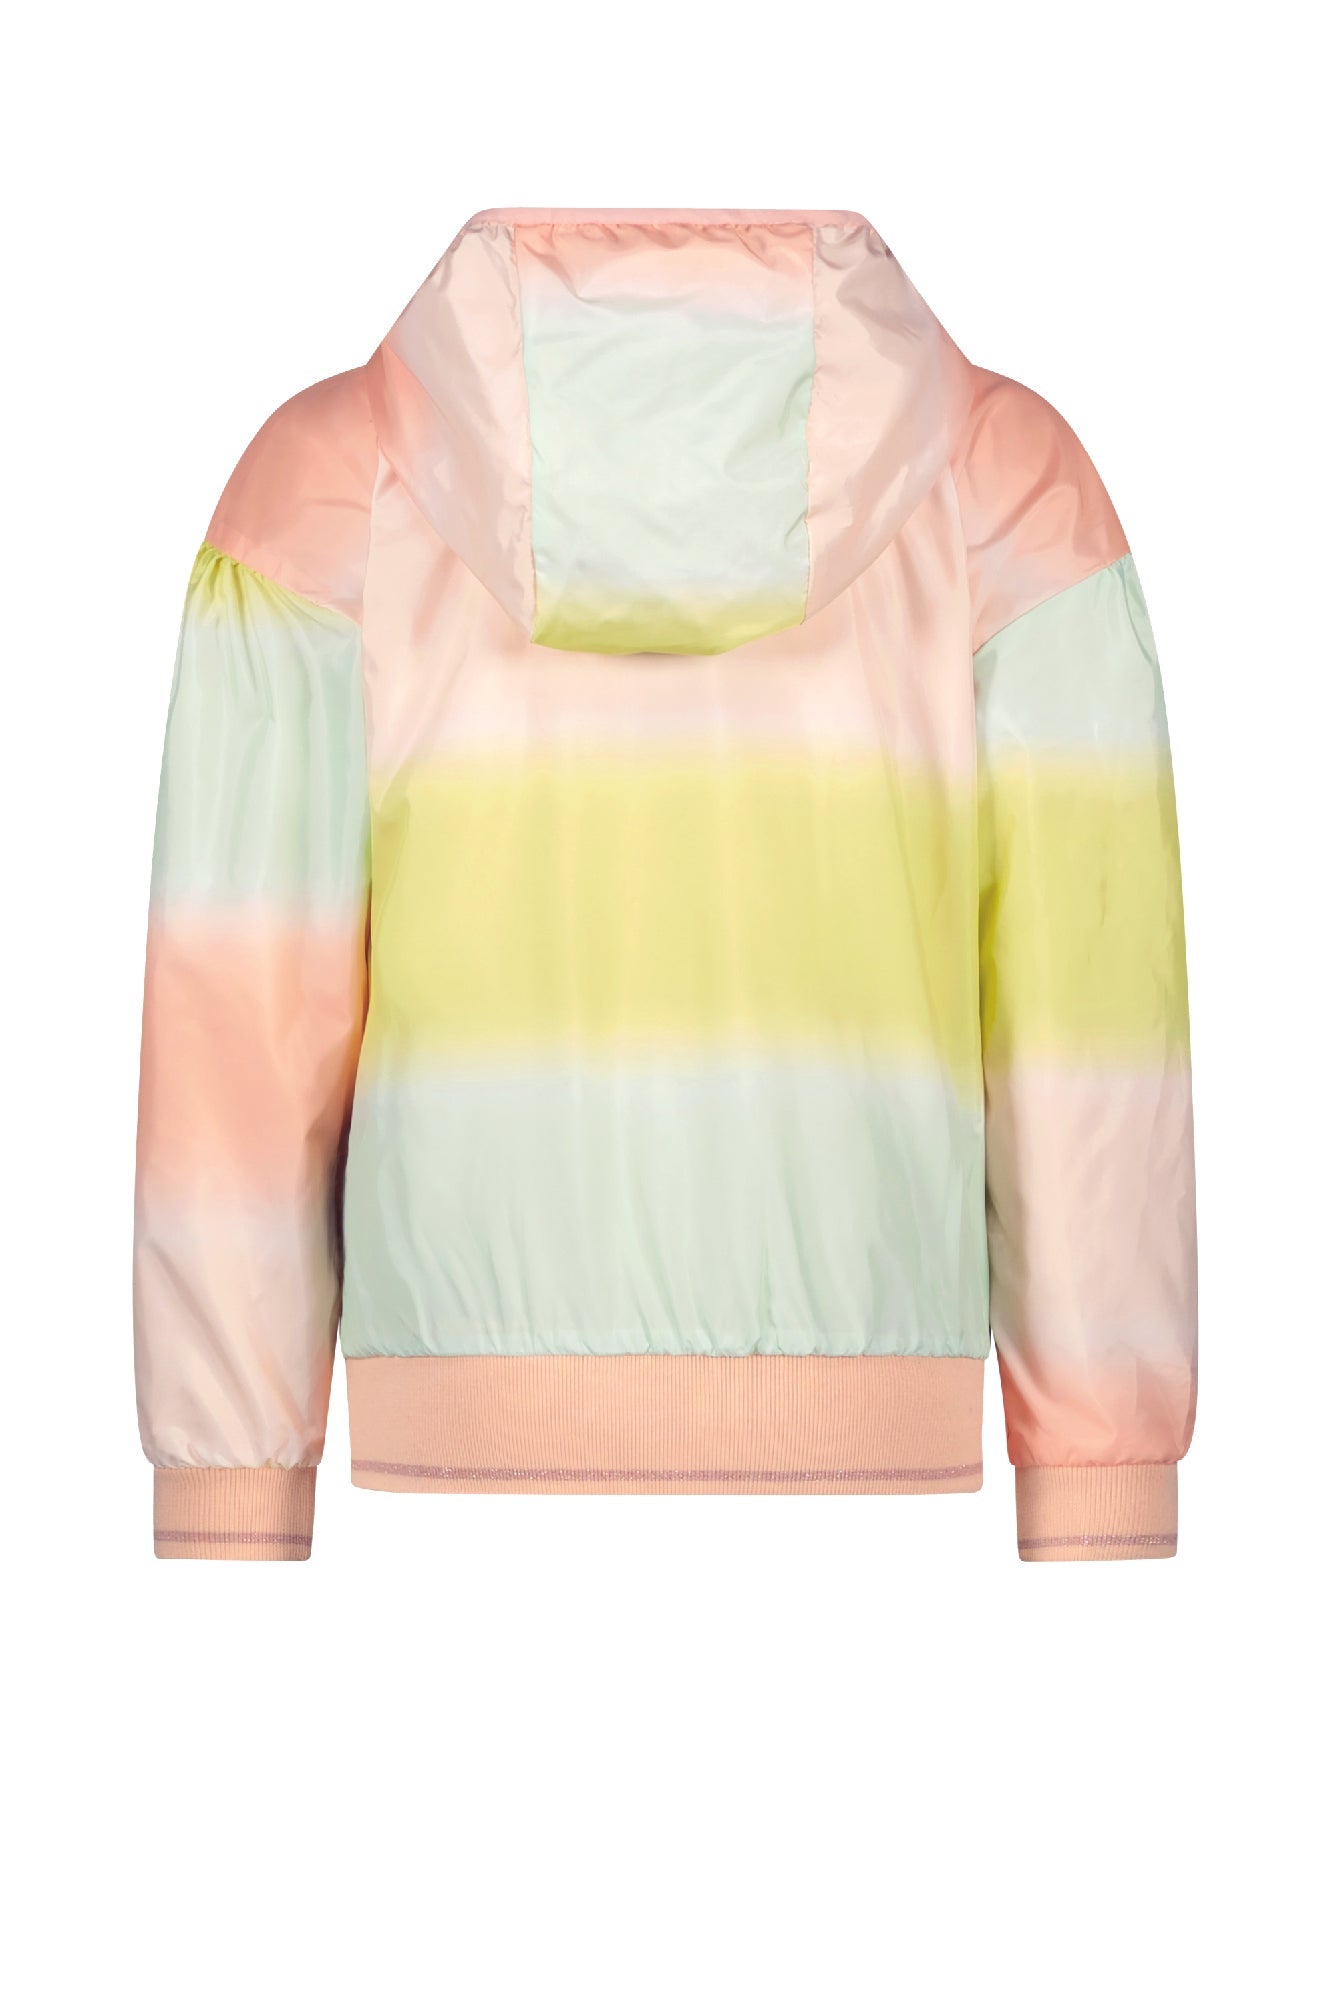 Meisjes Recycled polyester Beau hooded bomber jacket dropped shoulders van NoNo in de kleur Light Peach in maat 134-140.